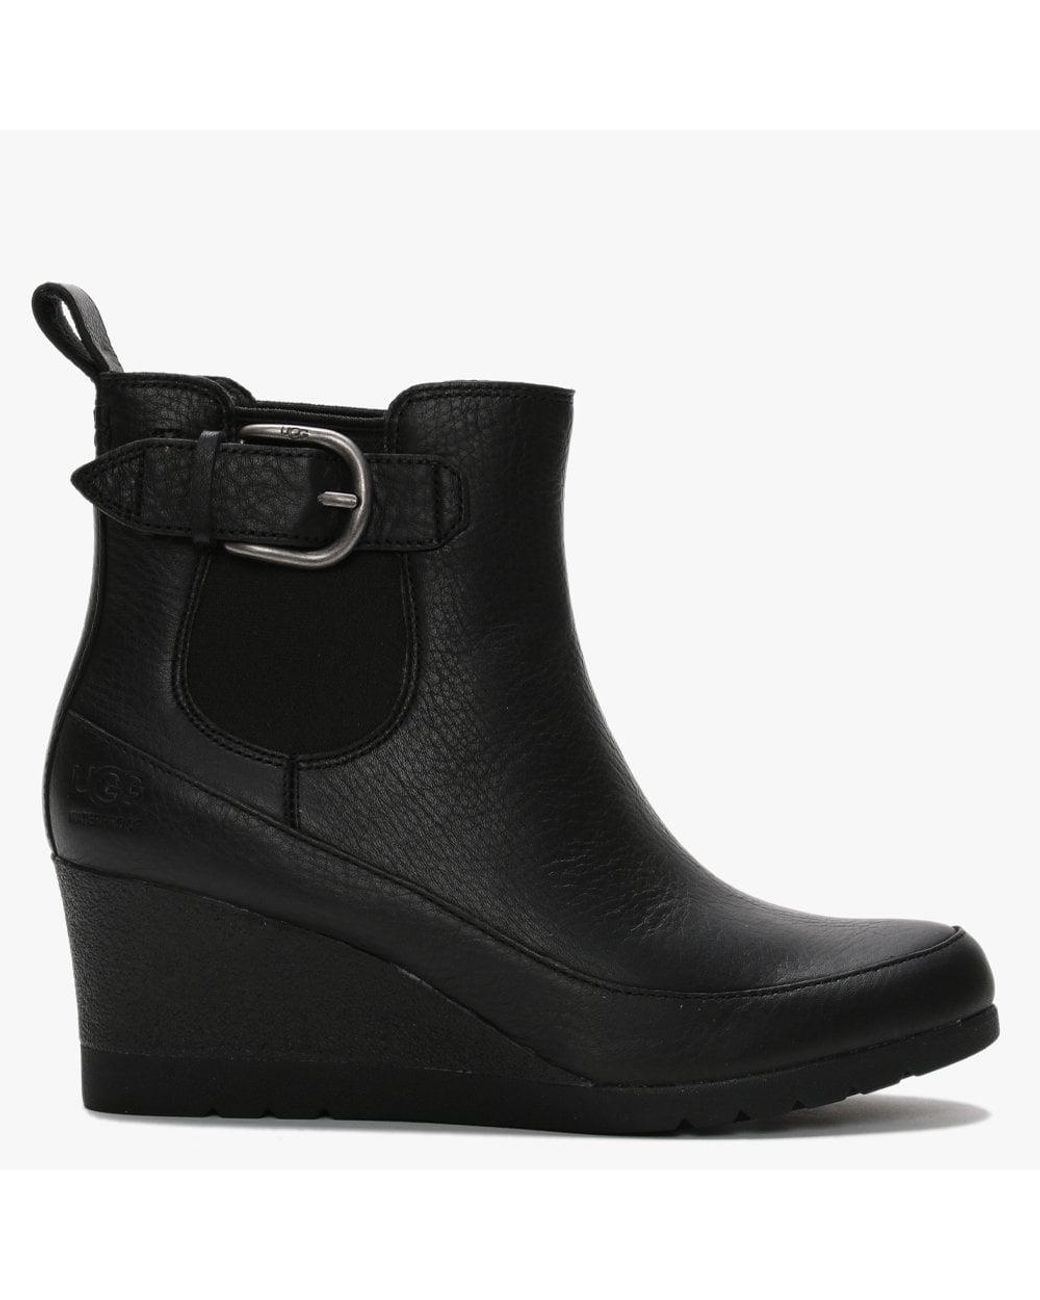 UGG Arleta Black Leather Wedge Ankle Boots | Lyst Australia